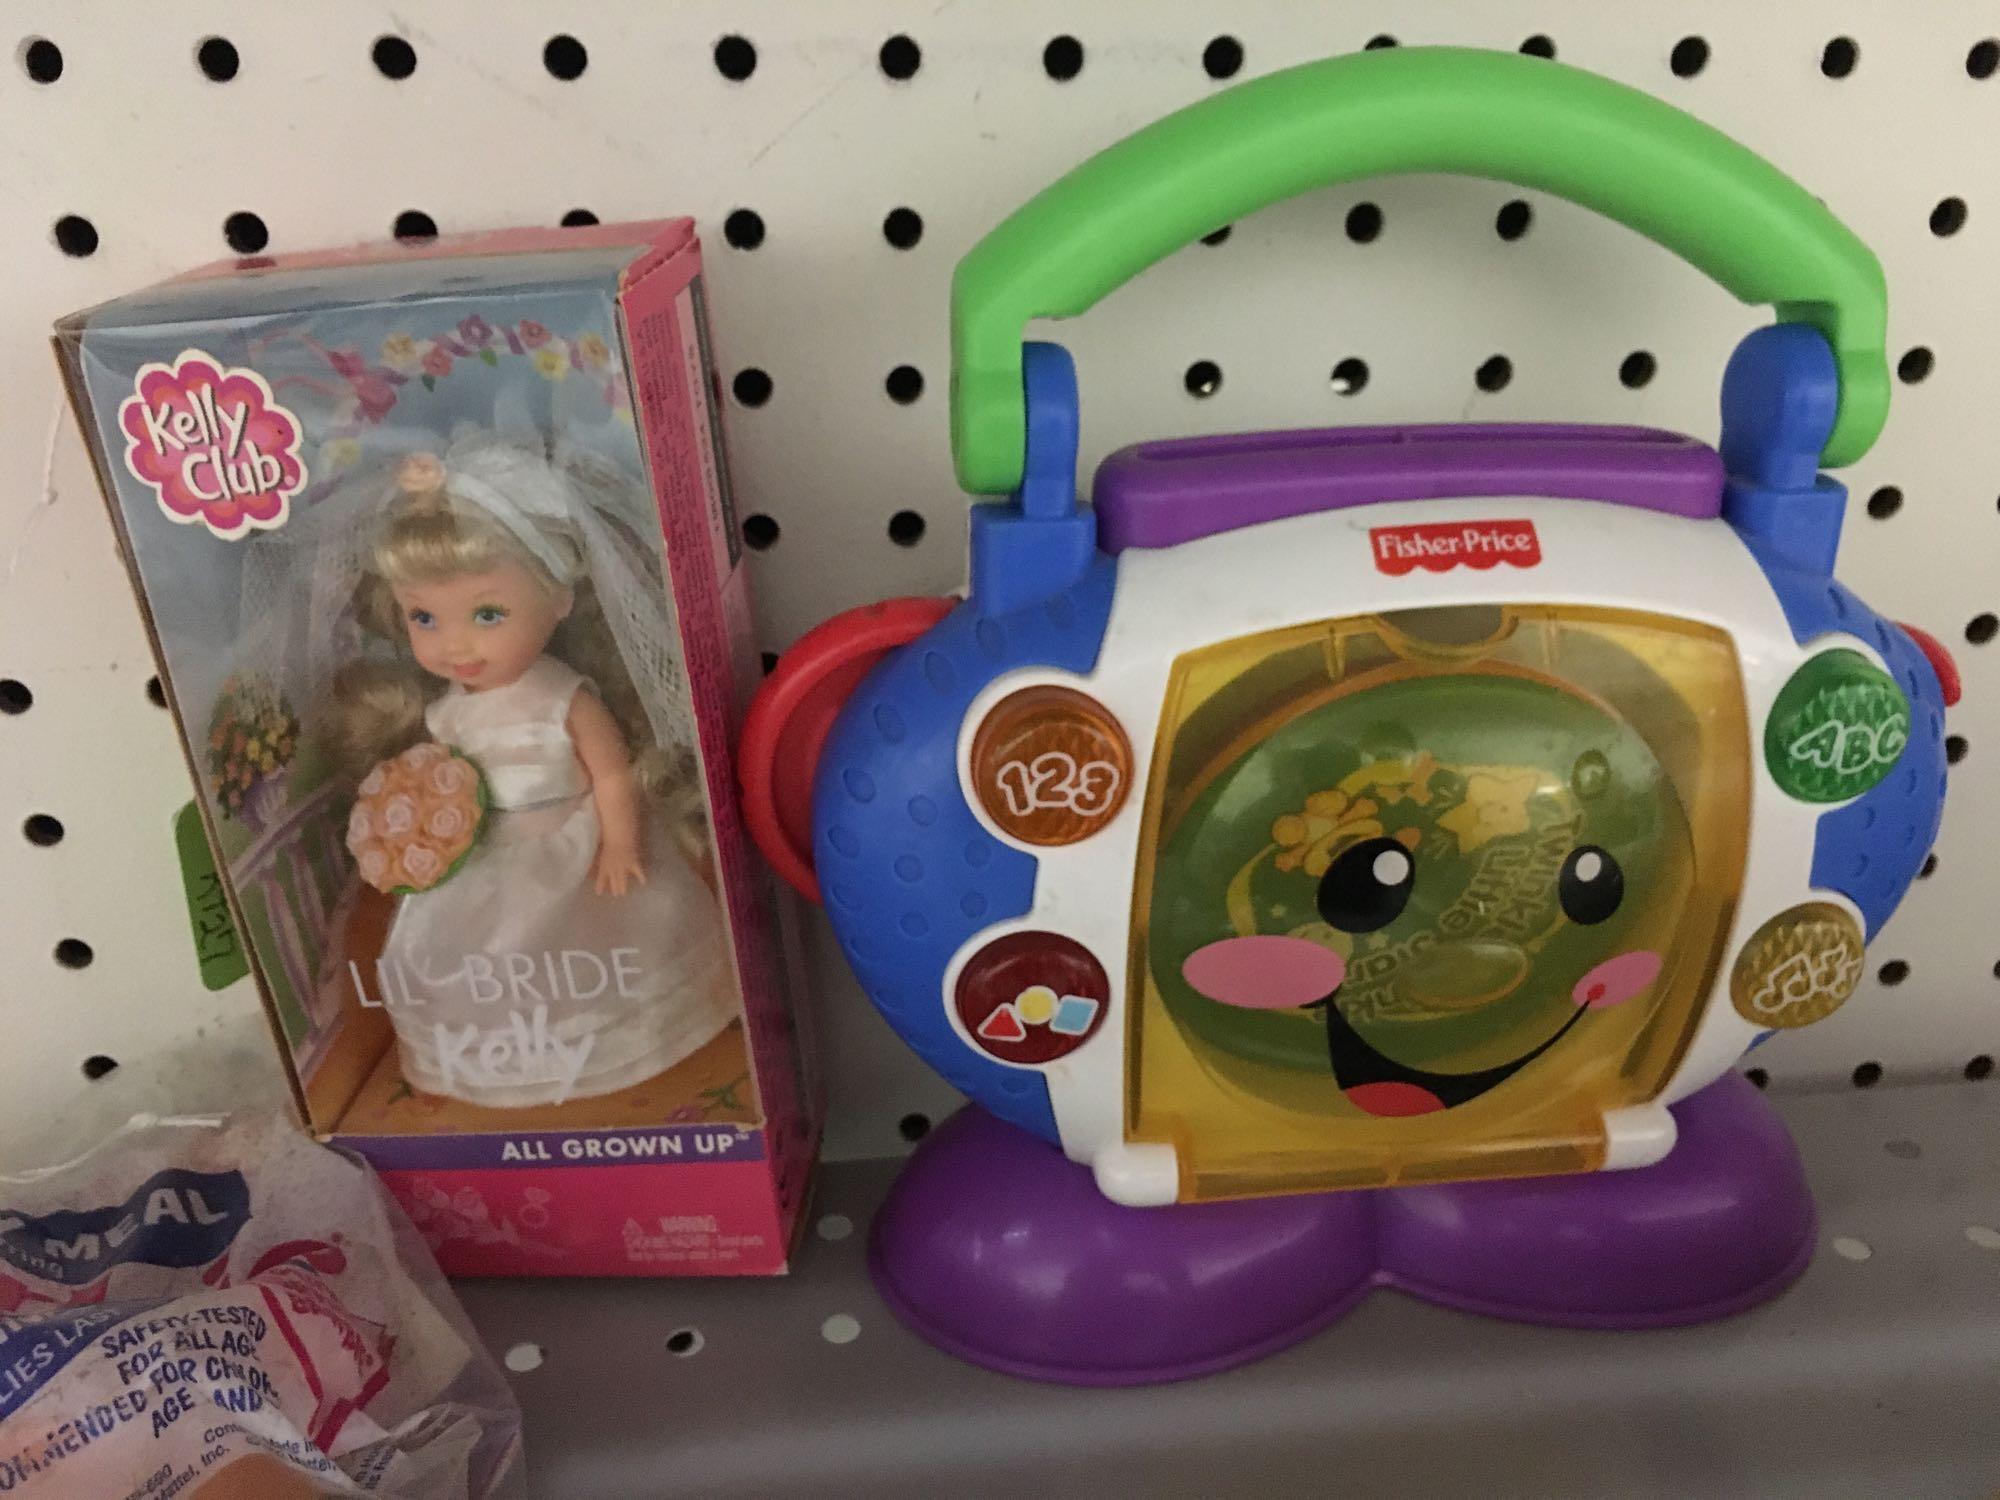 Children?s items